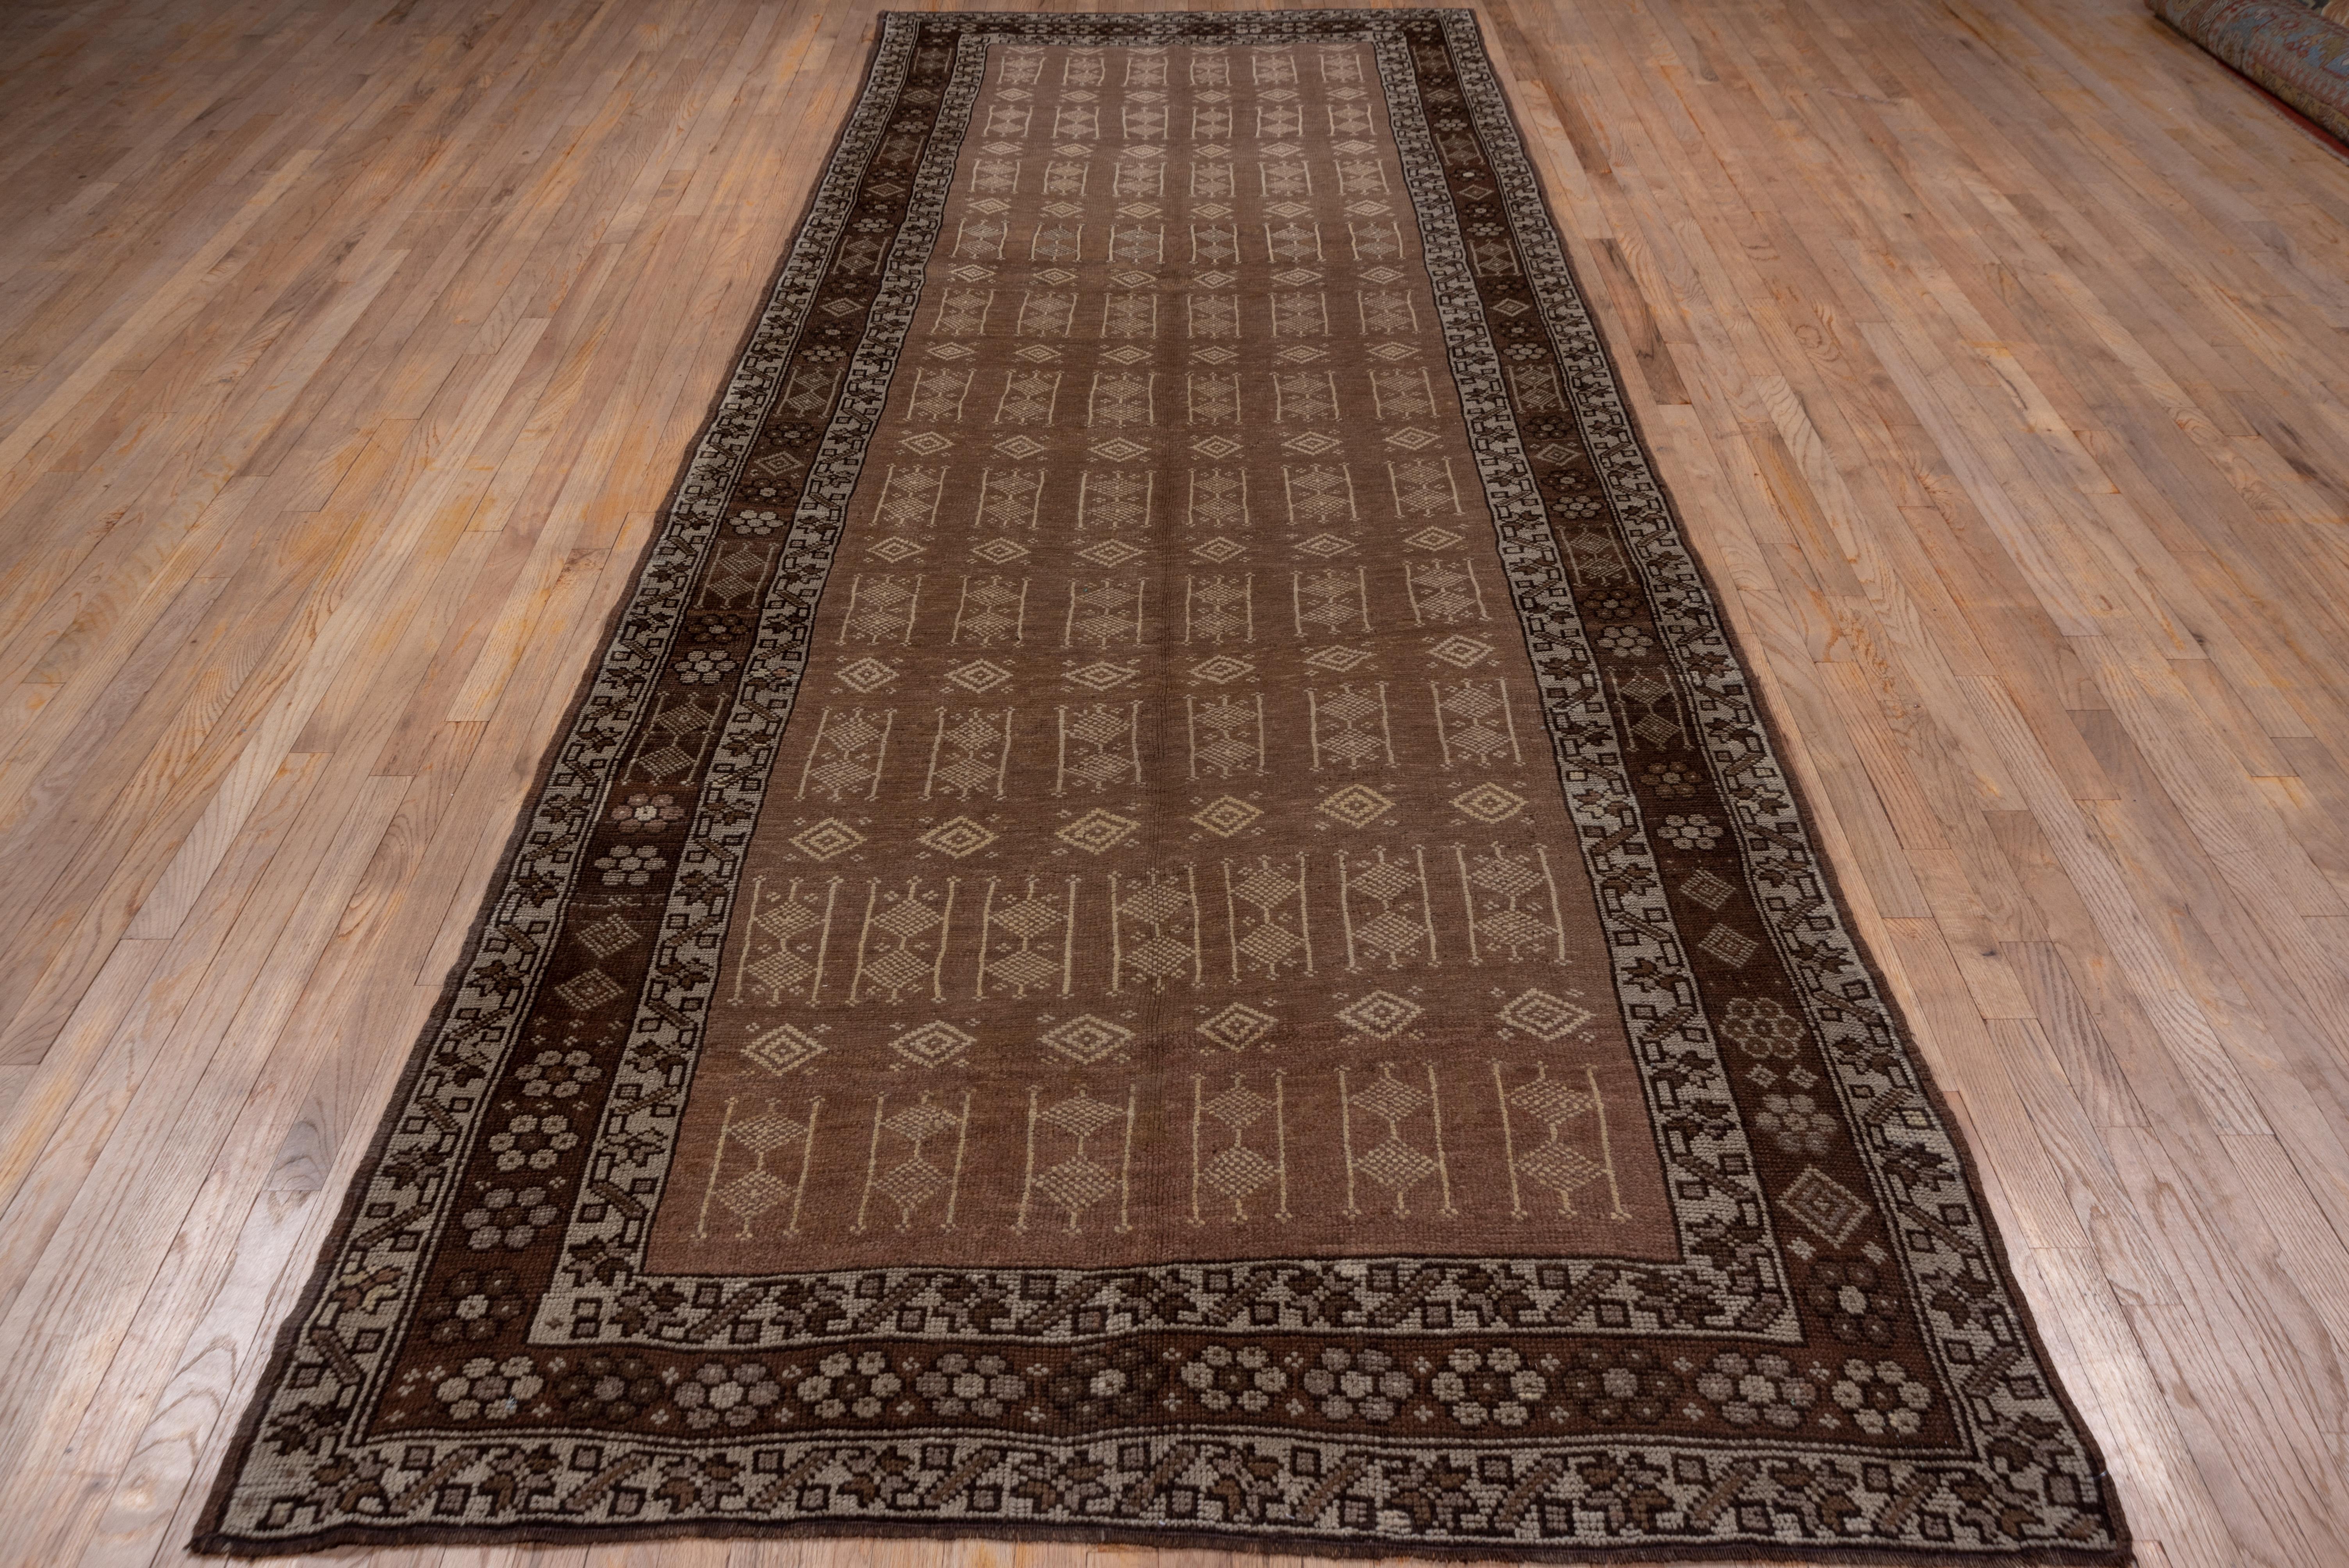 Tribal Unique Vintage Turkish Kars Gallery Carpet, Brown Palette, Allover Field For Sale